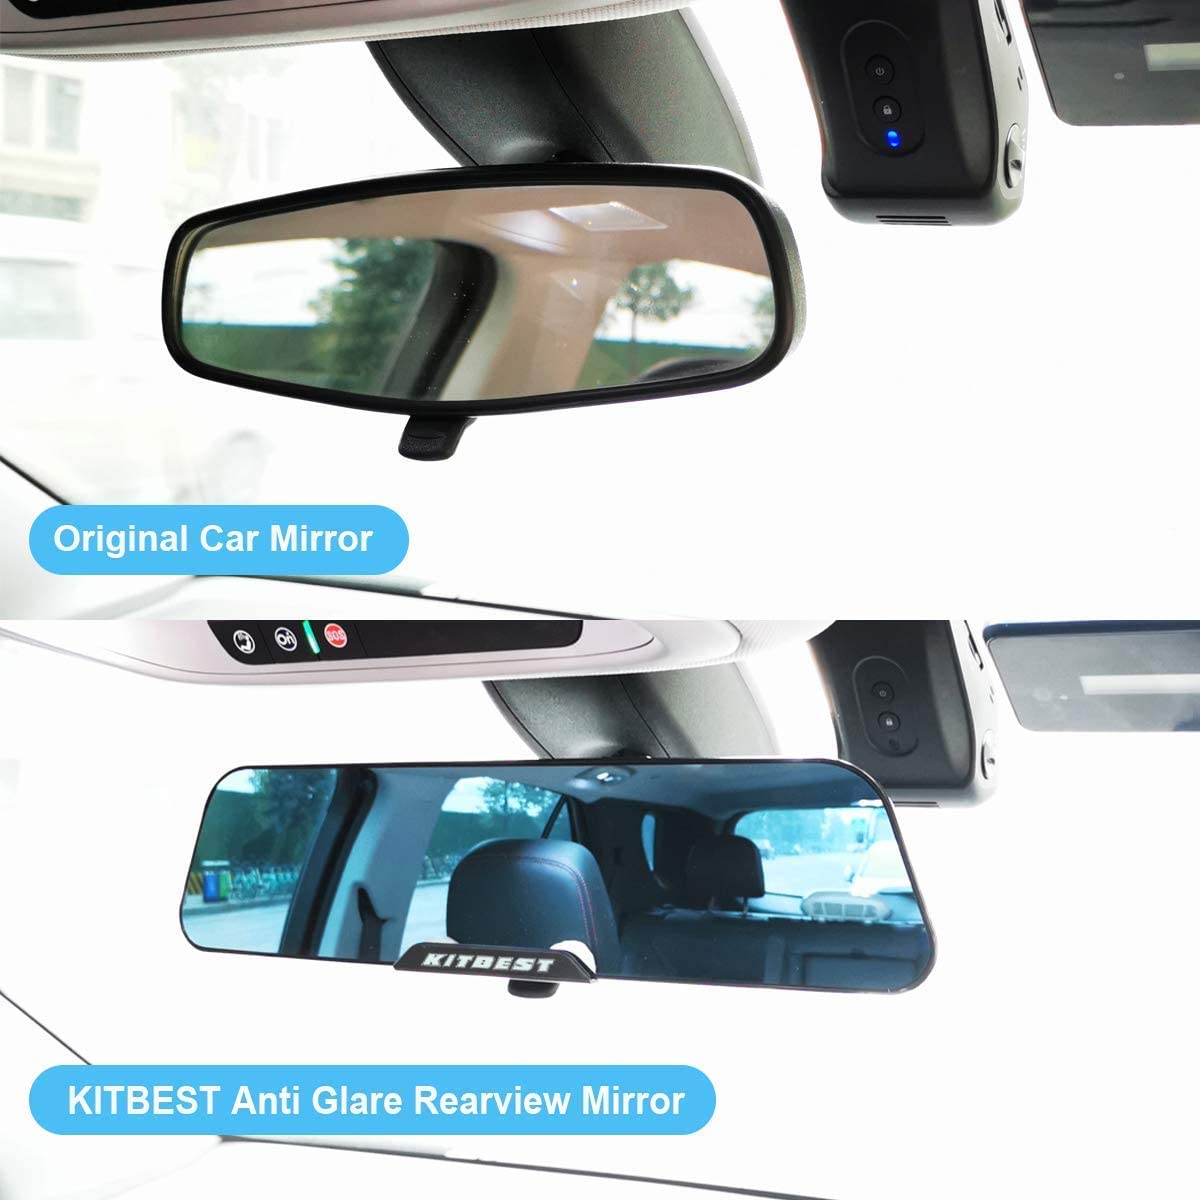 KITBEST Anti Glare Rear View Mirror and Car Mesh Organizer